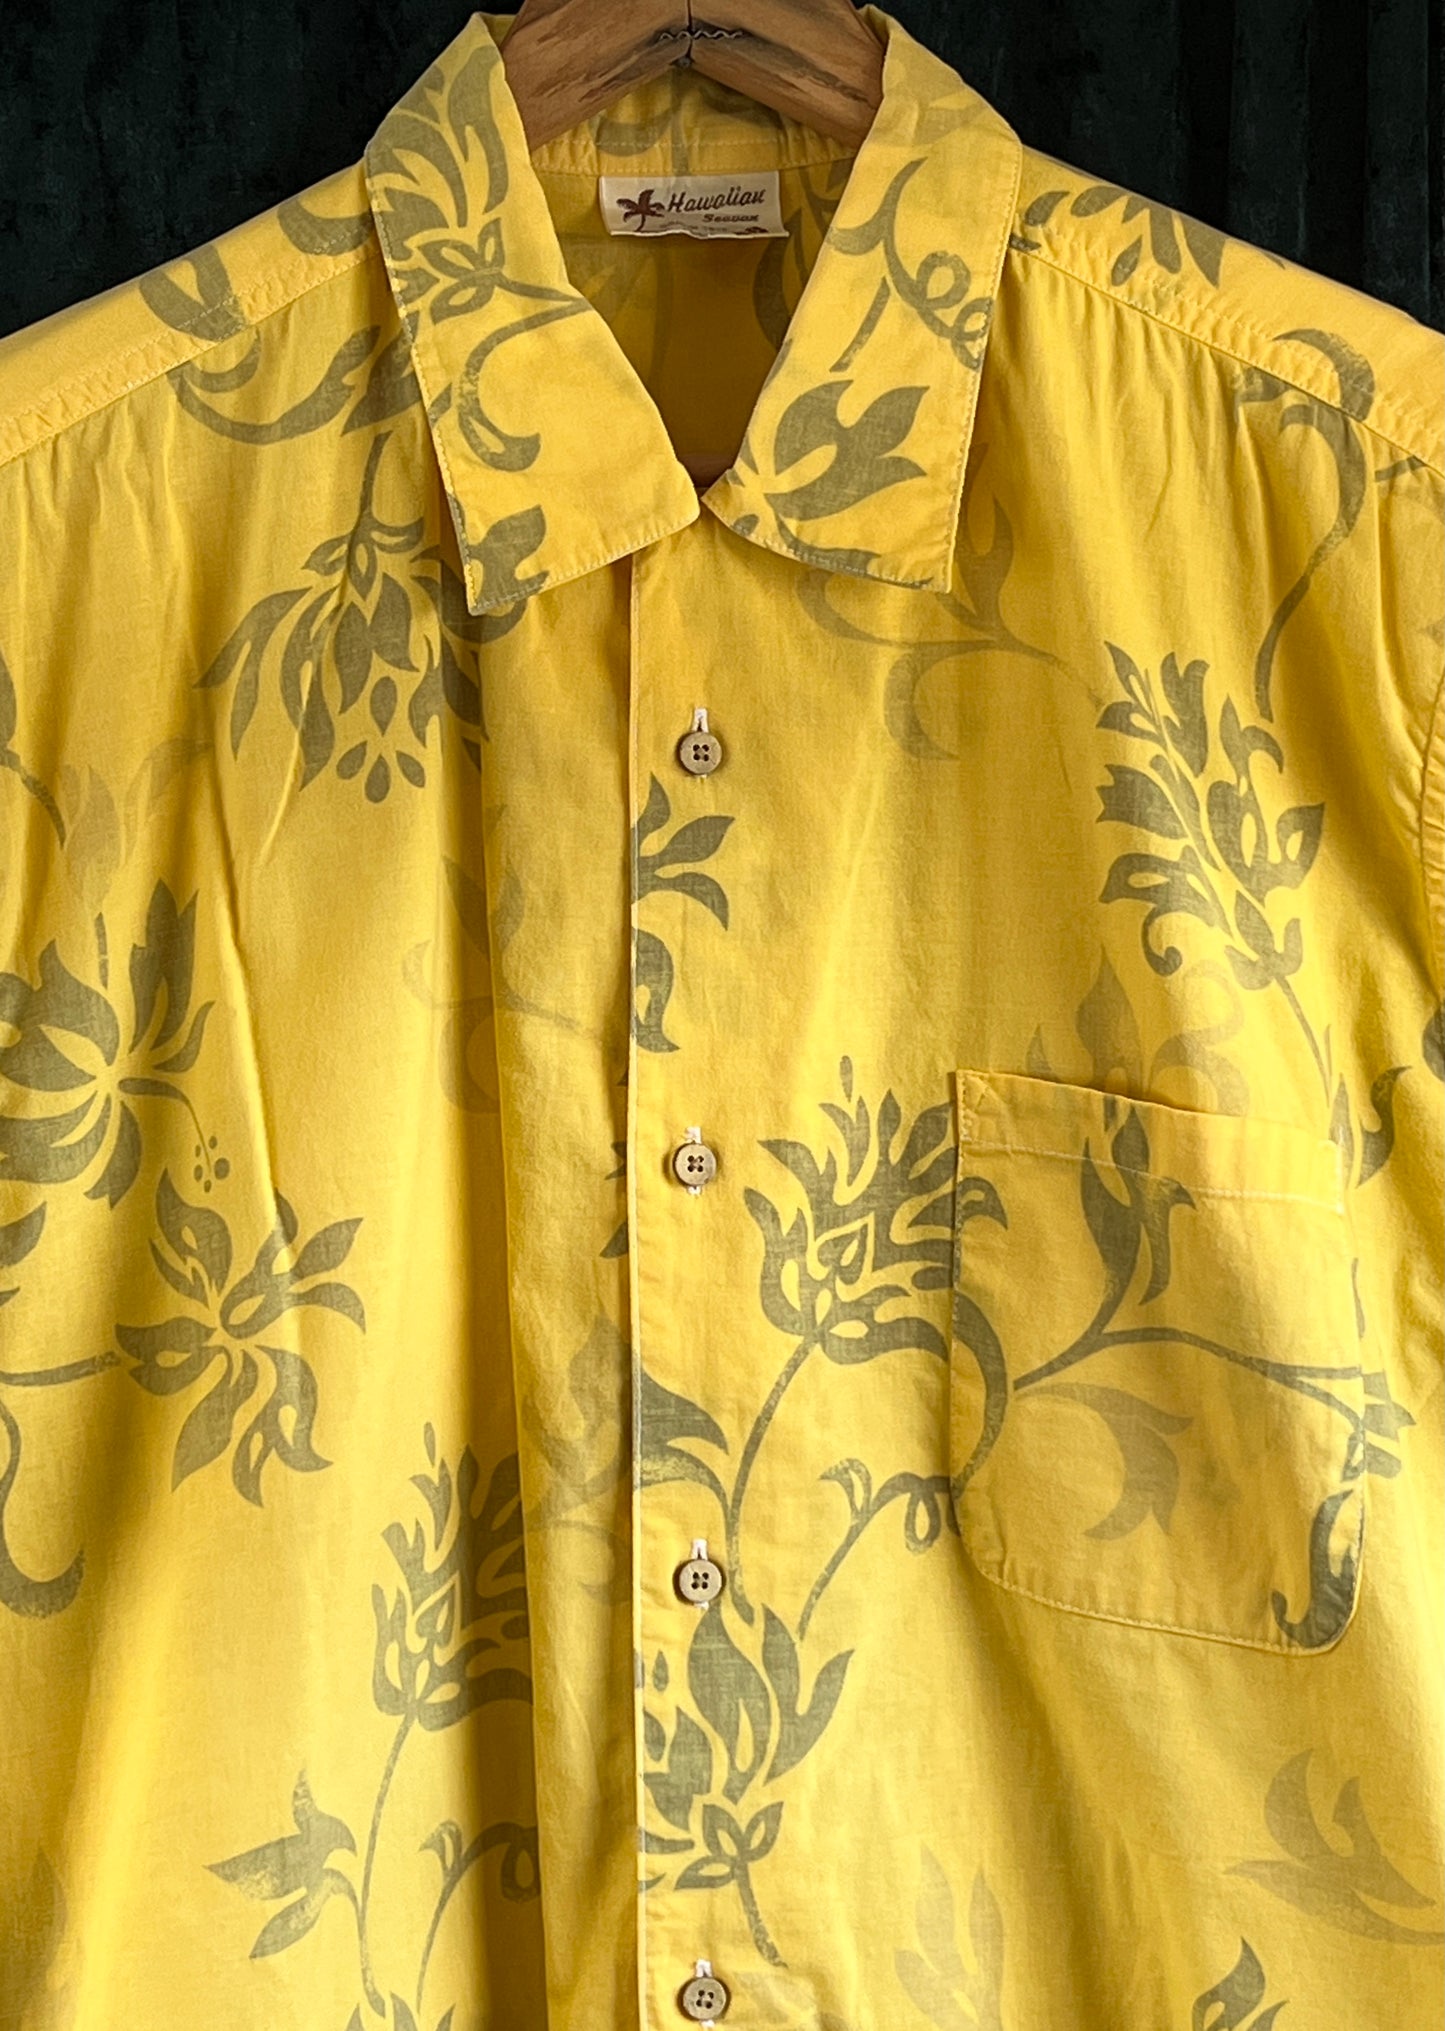 Vintage 1960s Hawaiian Shirt yellow grey floral sz XL festival tiki rockabilly